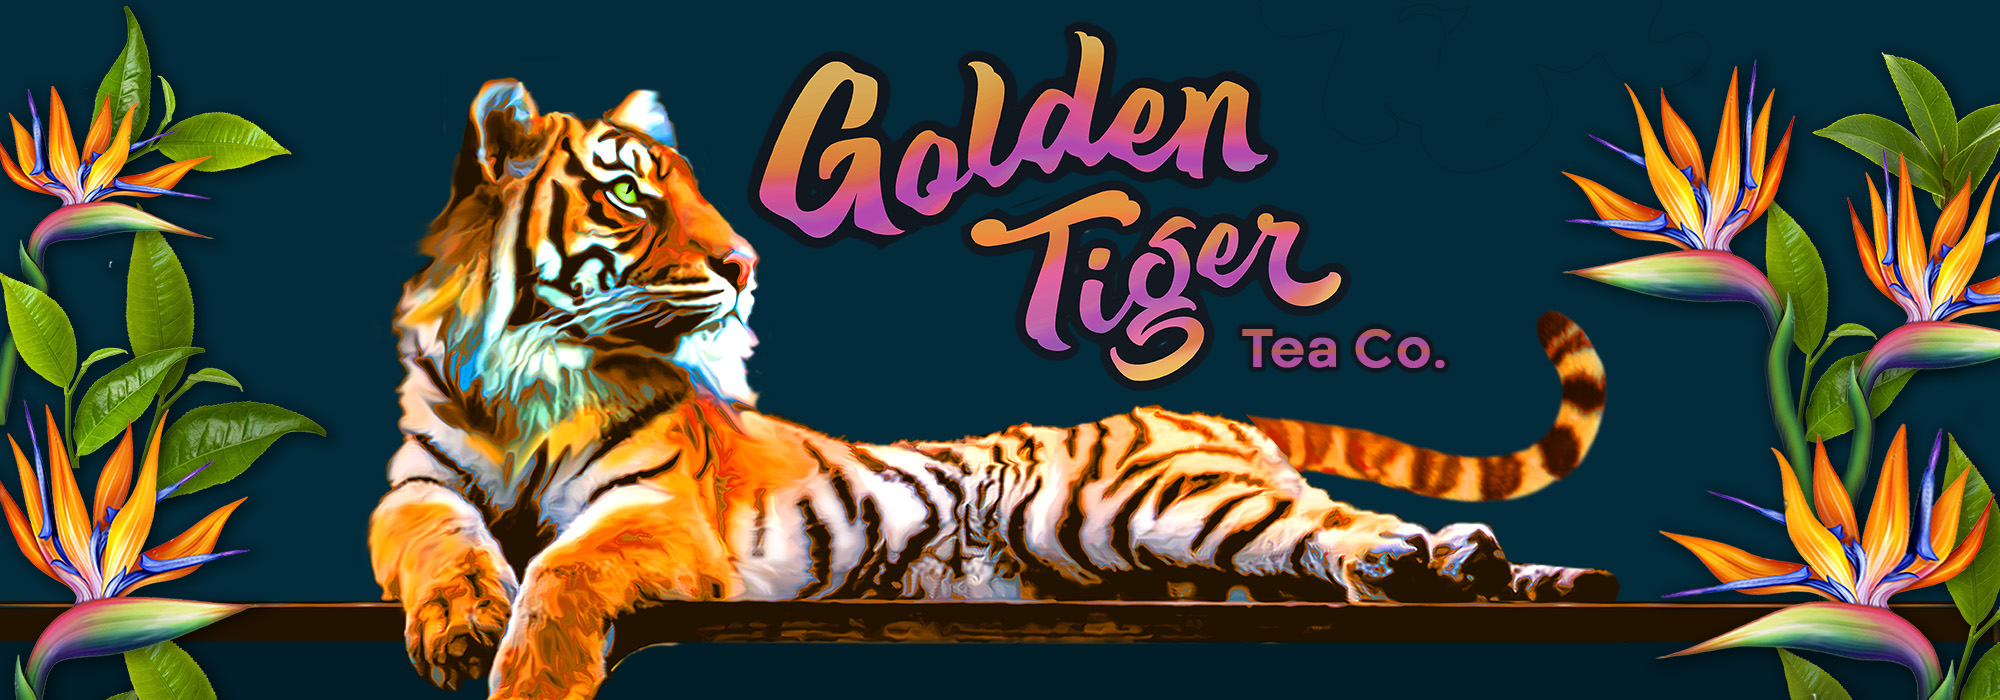 Golden Tiger Tea Co.